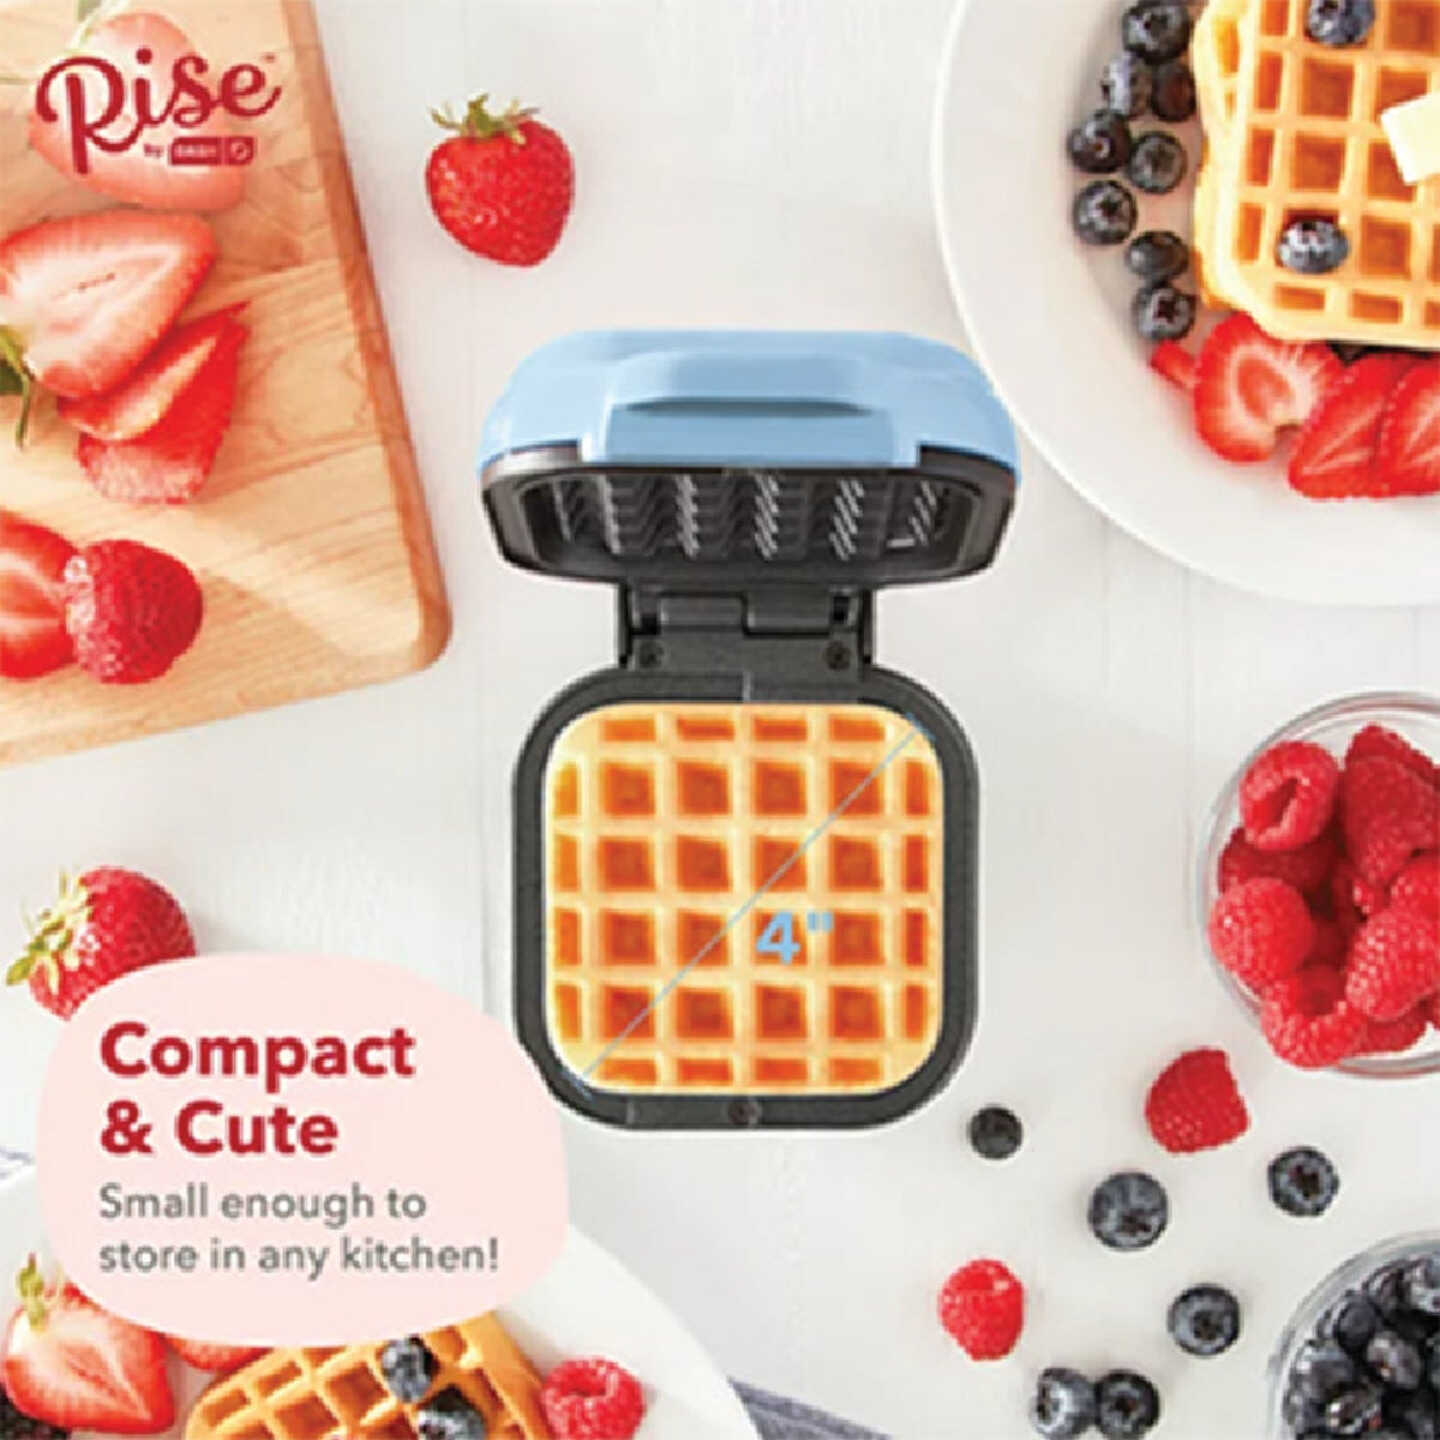 Rise by Dash 4 In. Light Blue Mini Waffle Maker - Baller Hardware